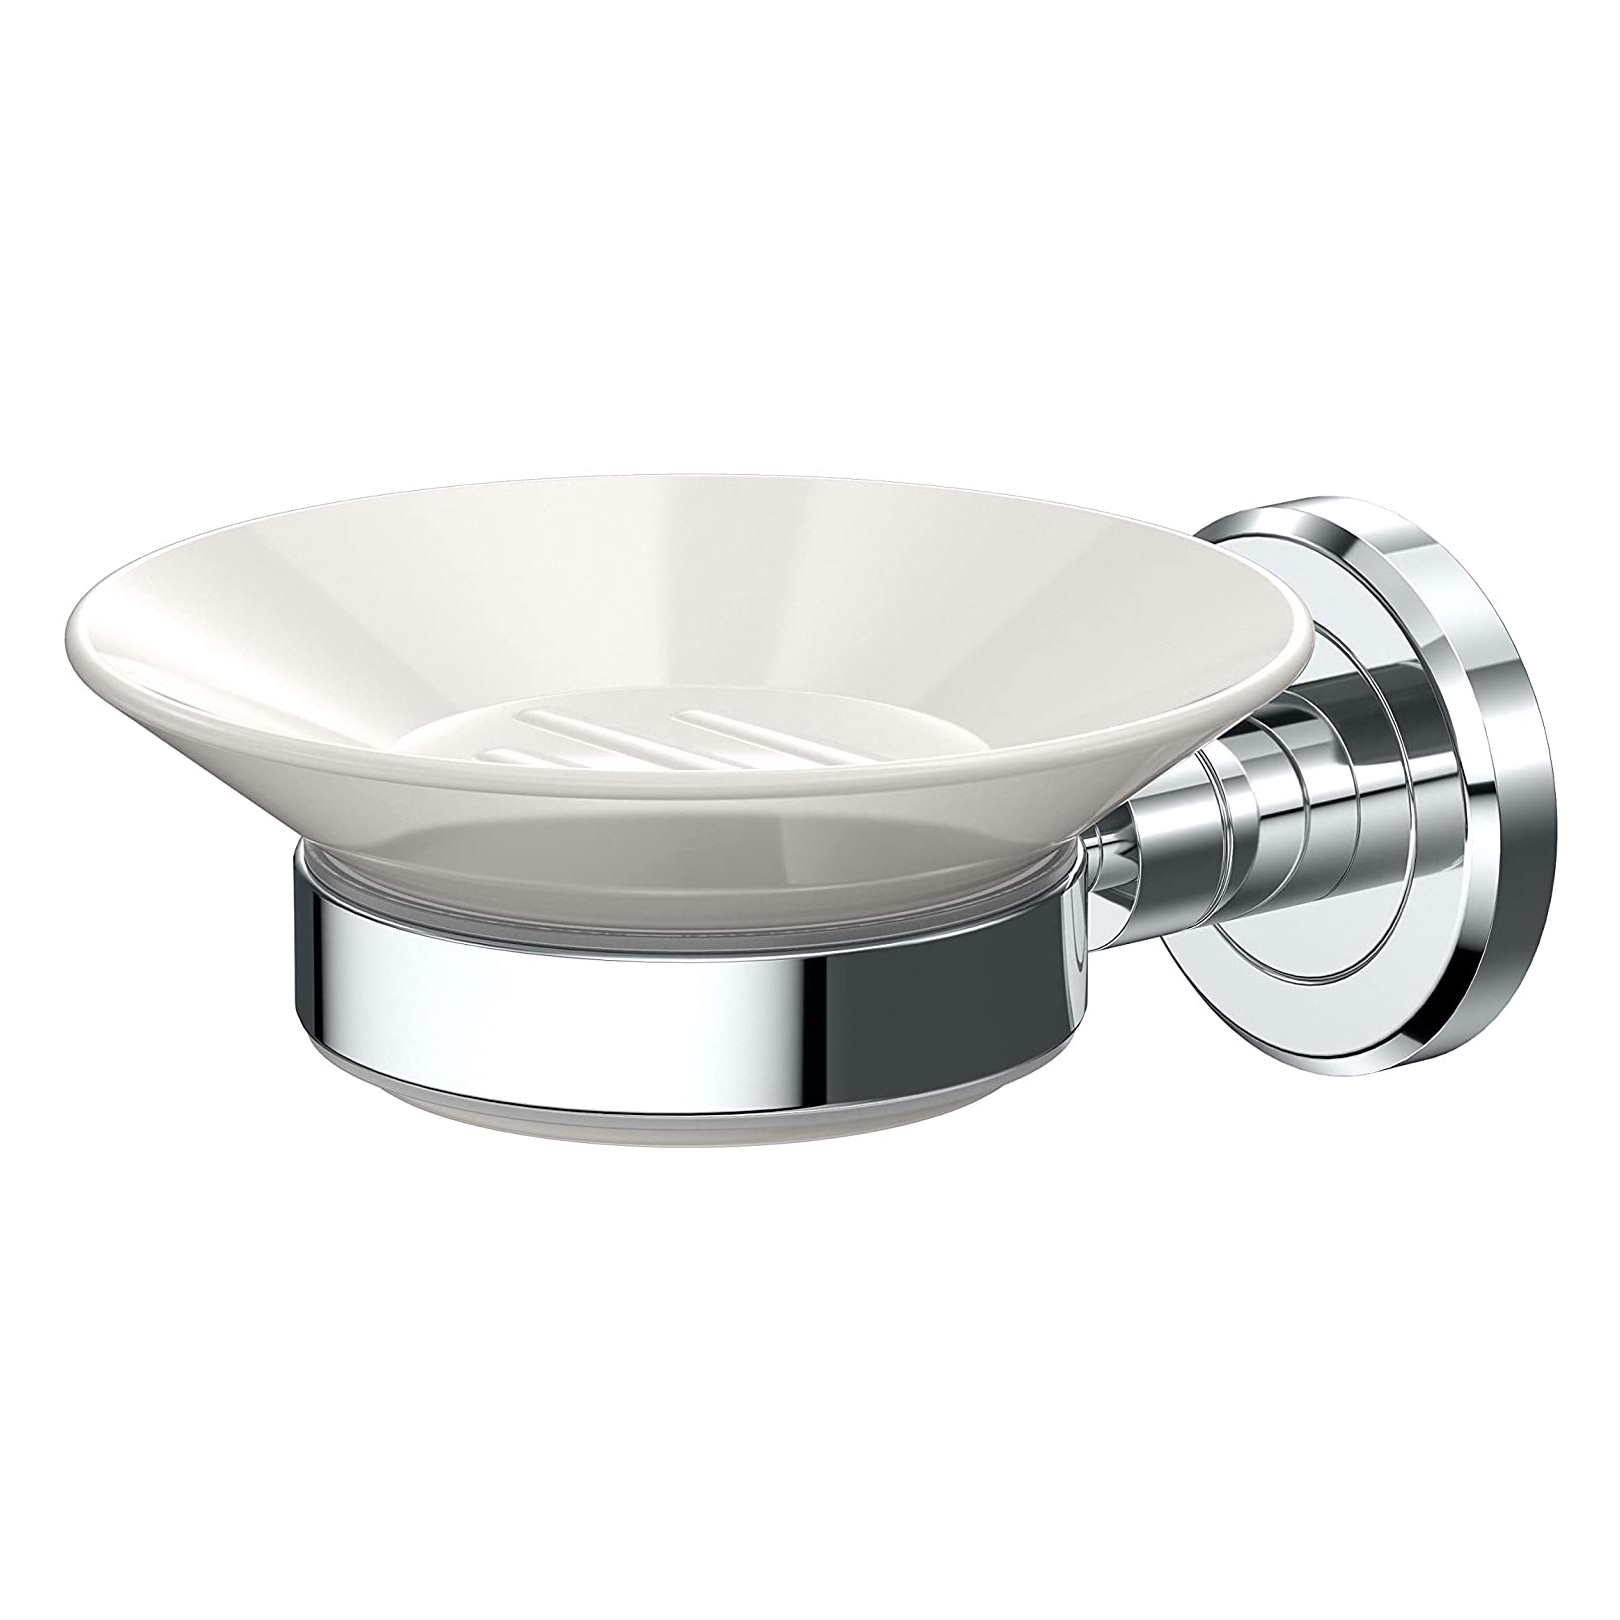 Latitude2 Soap Dish Holder in Chrome